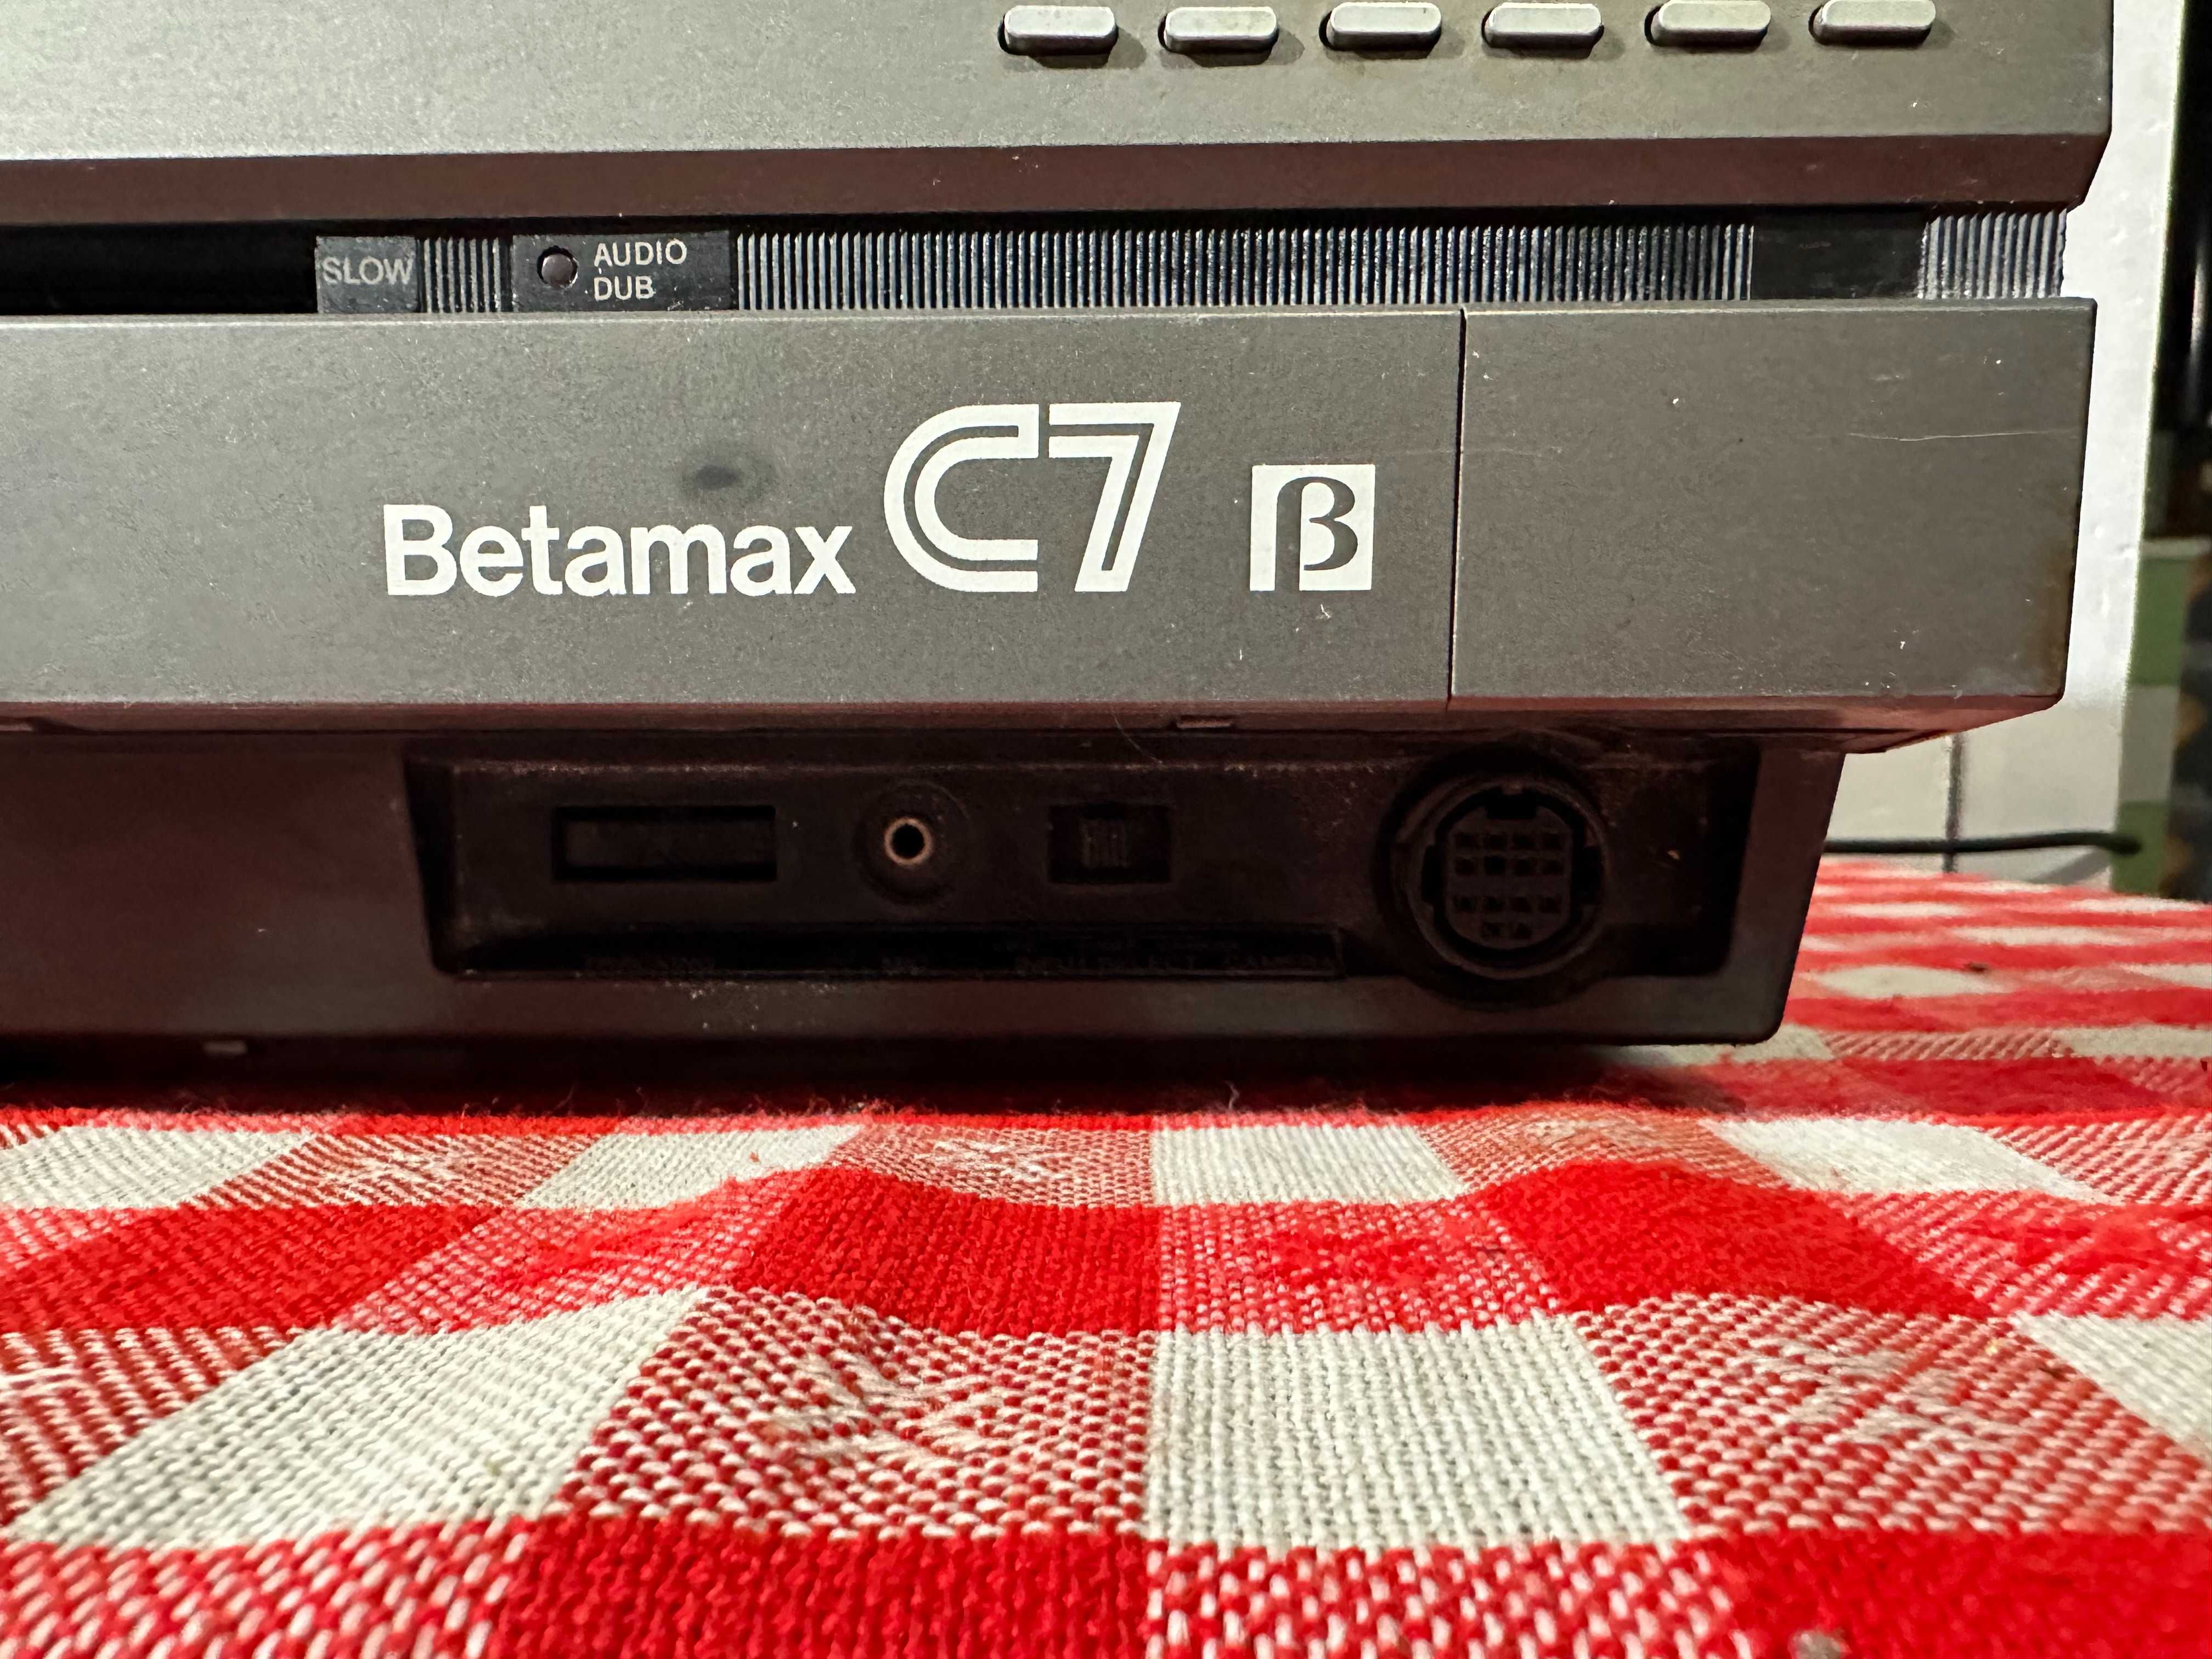 Sony SL-C7 Betamax